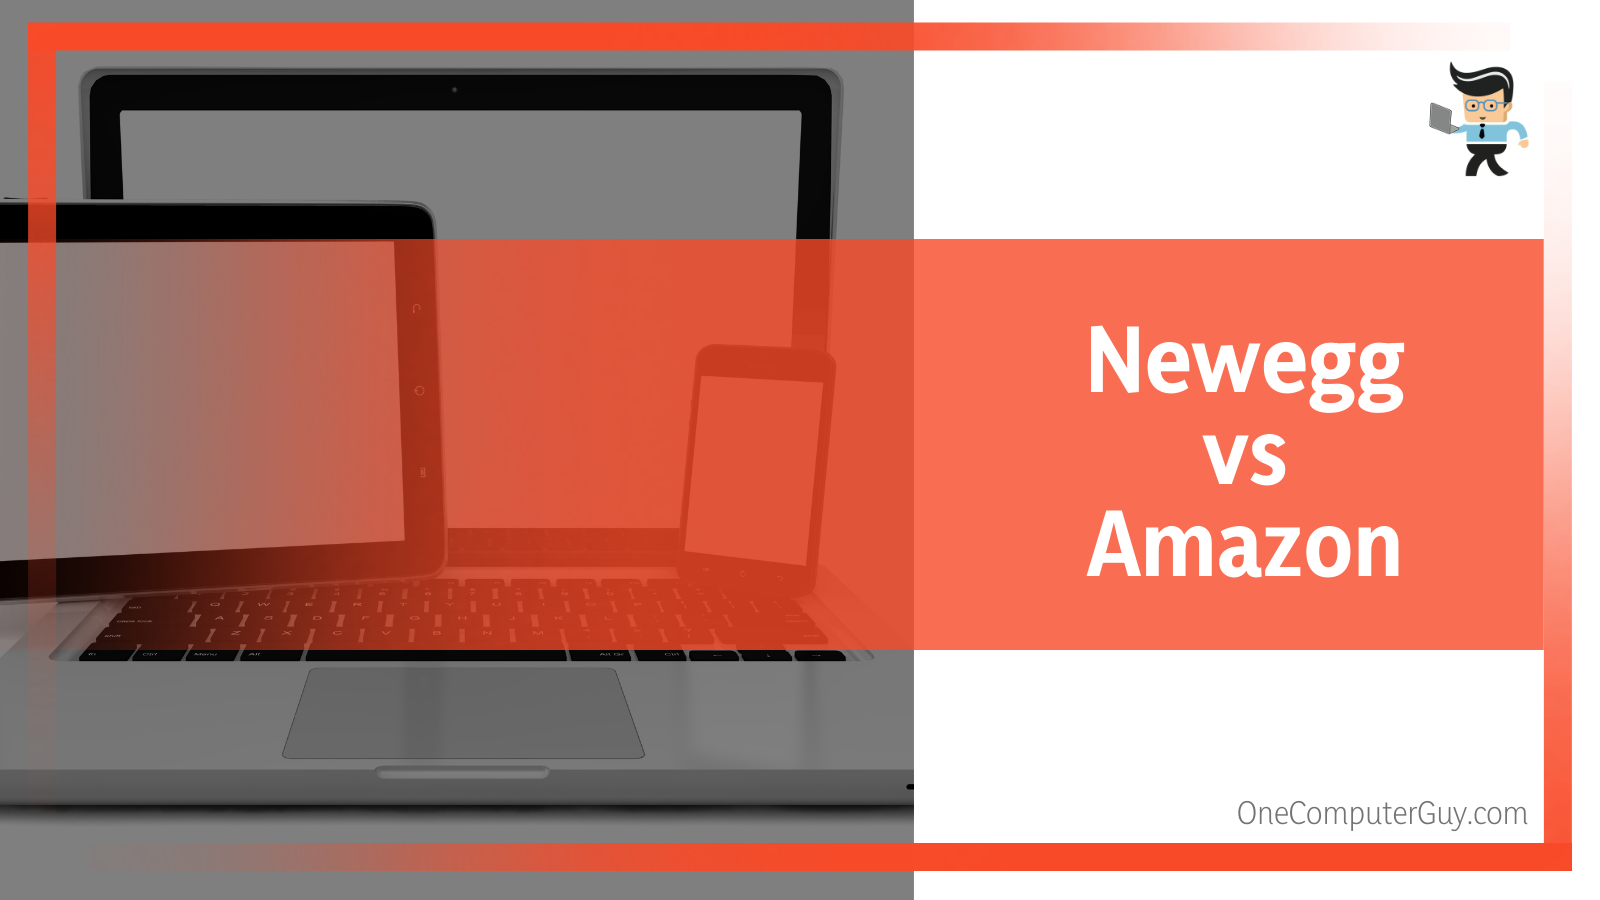 Newegg and Amazon Buying Comparison